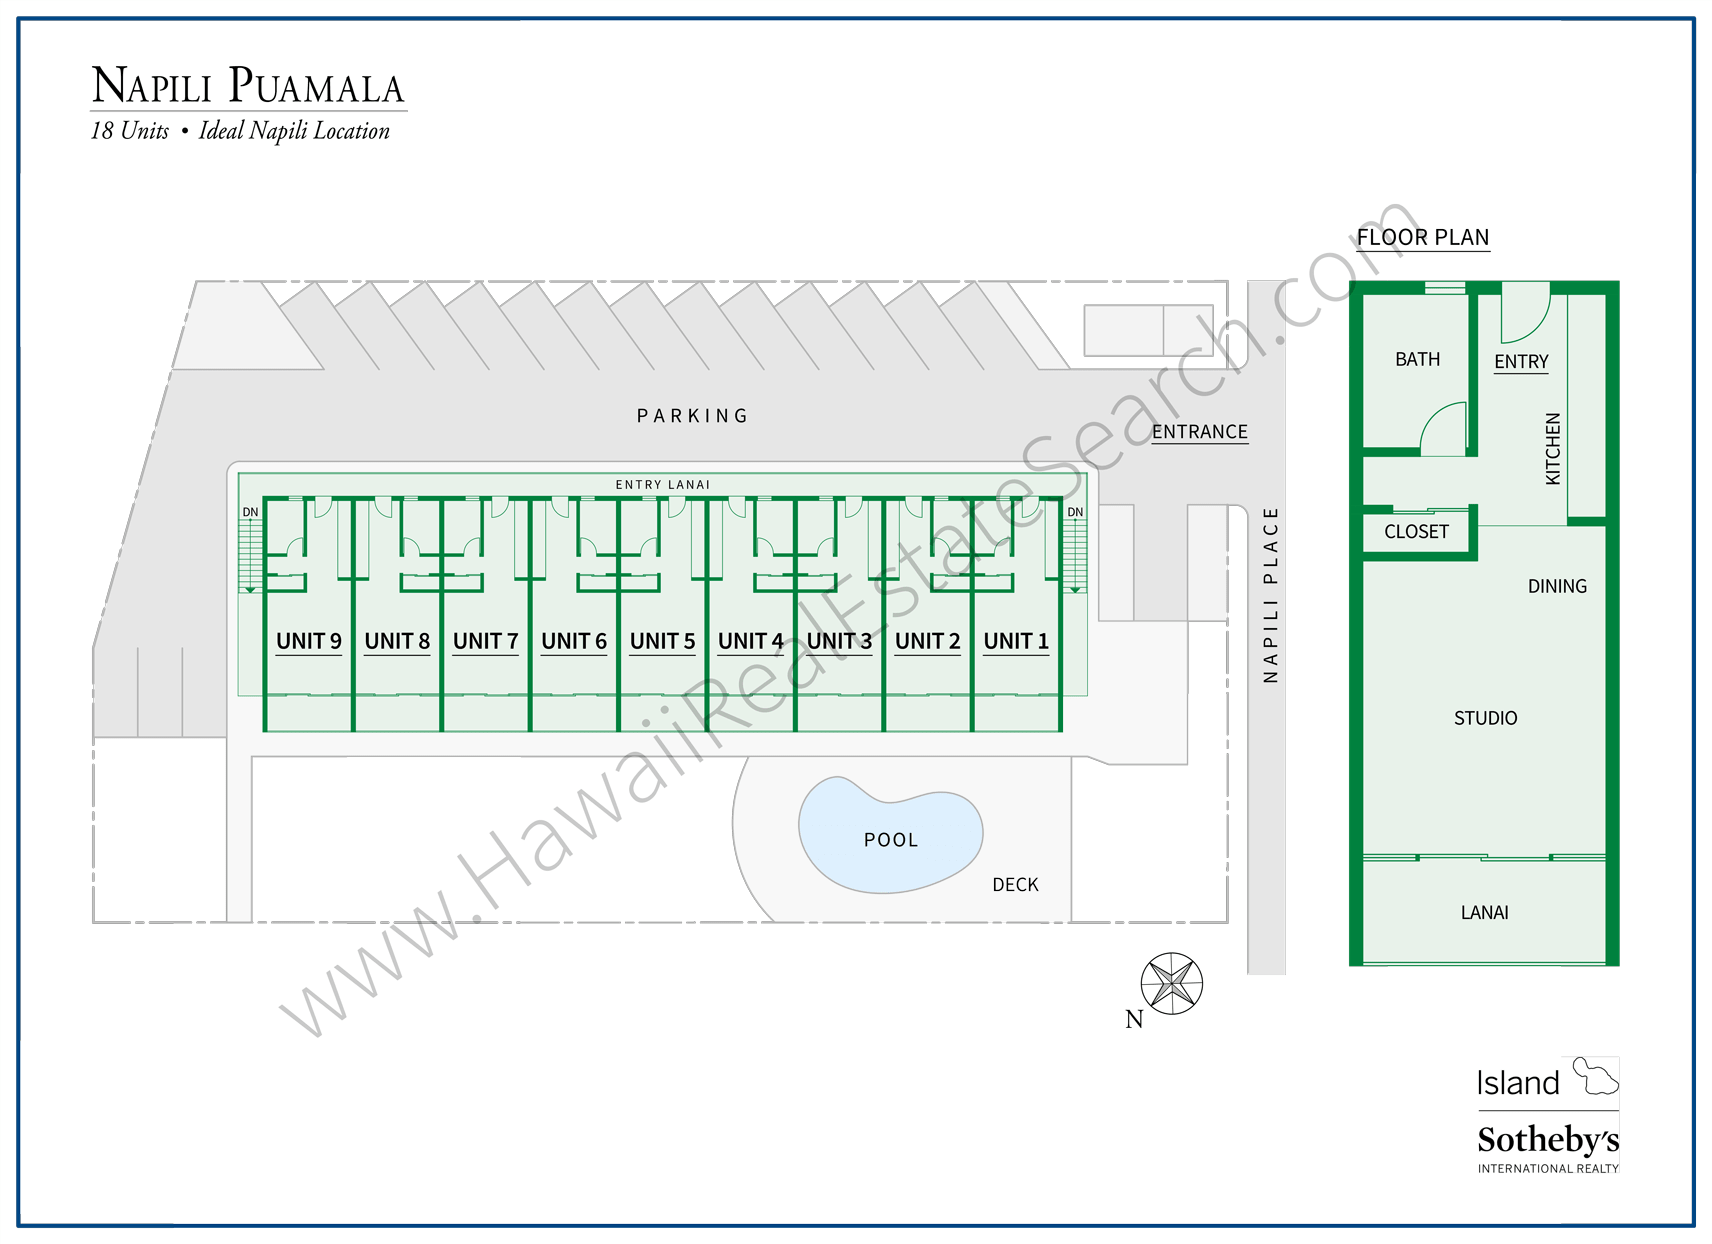 Napili Puamala Map and floor plan